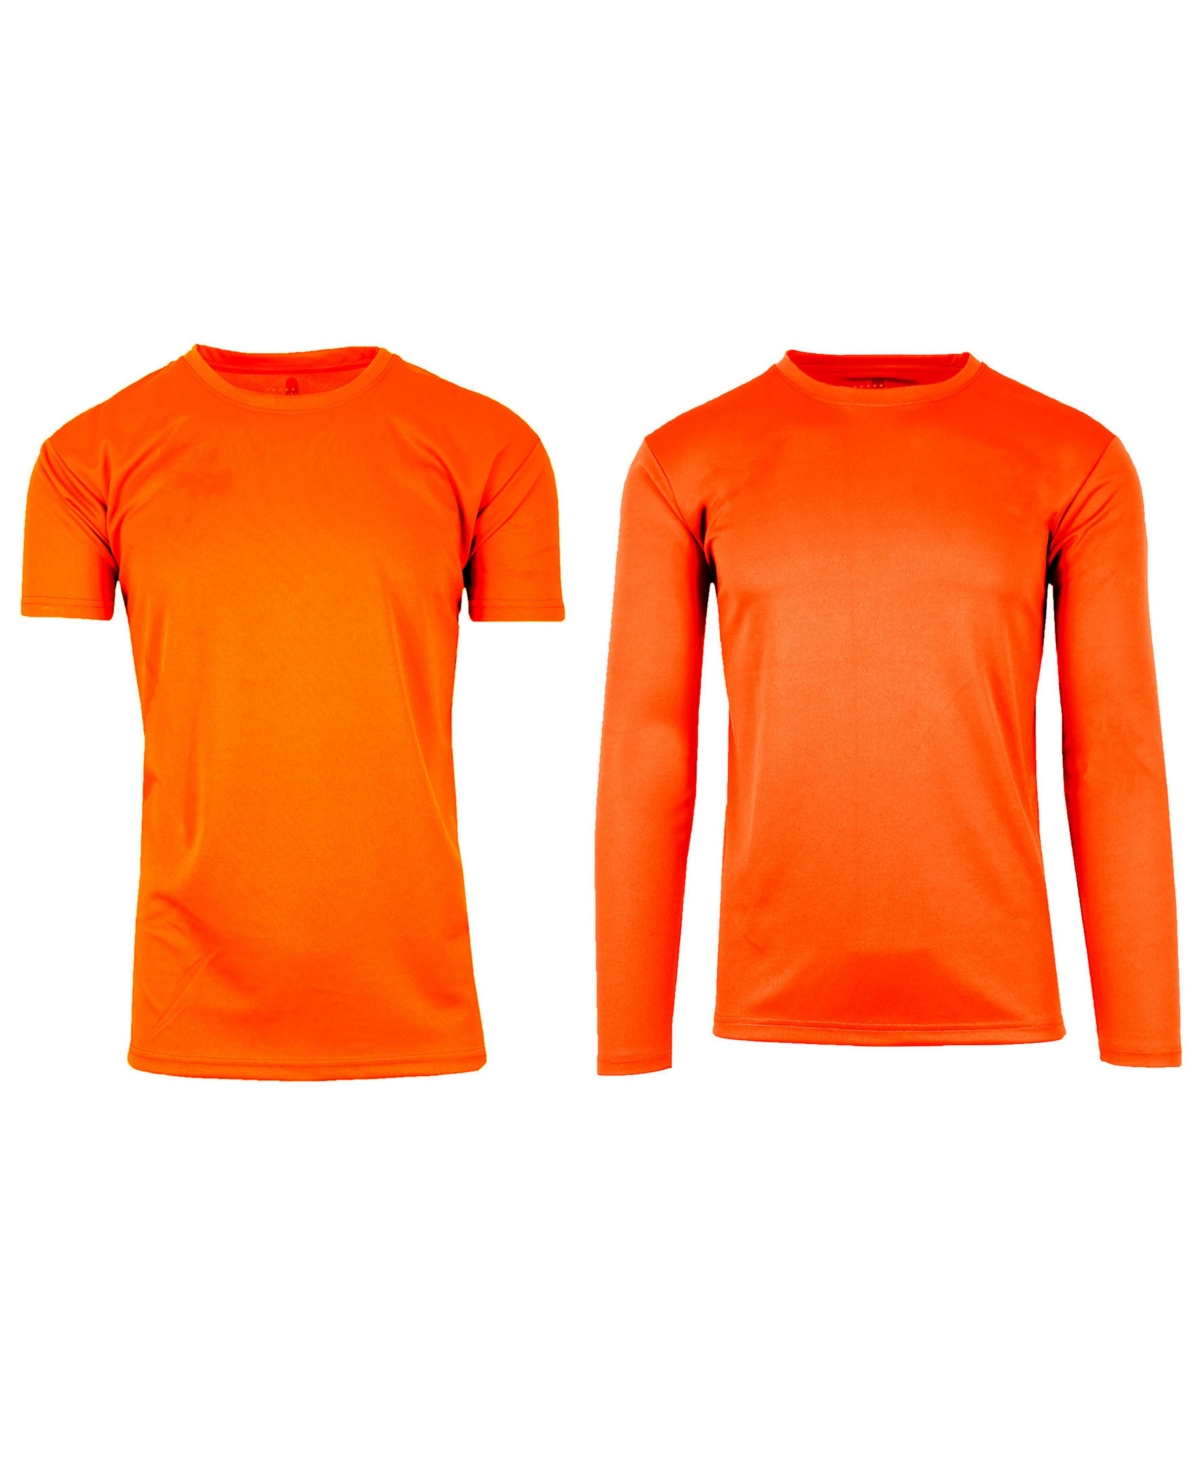 Men's Short Sleeve Long Sleeve Moisture-Wicking Quick Dry Performance Crew Neck Tee-2 Pack - Neon Orange-Neon Orange